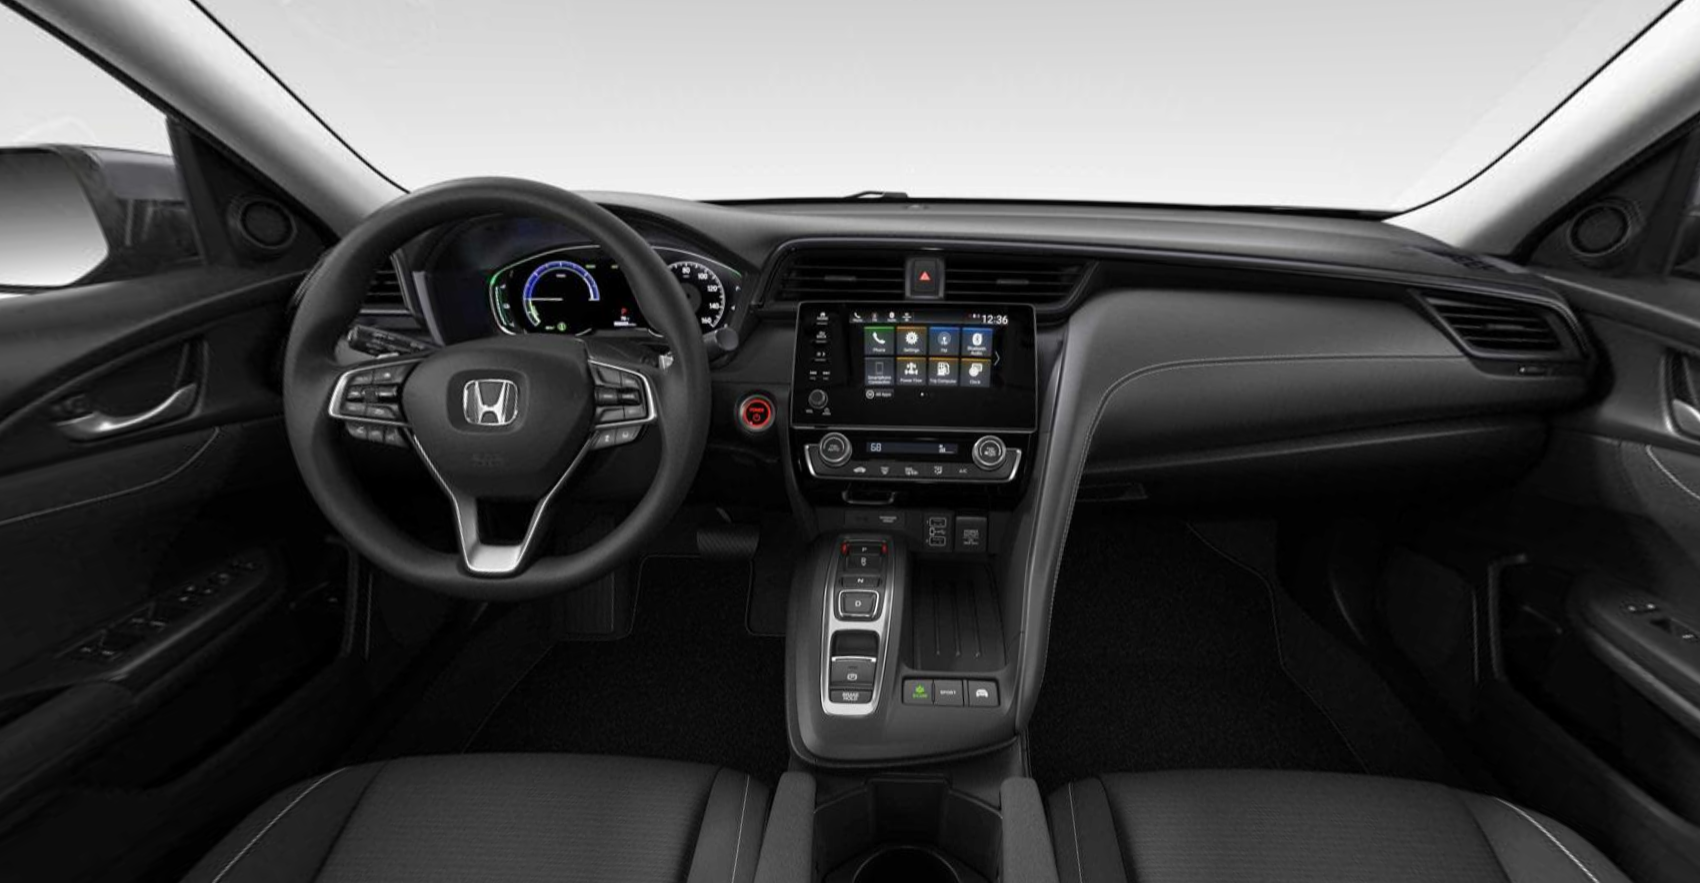 2019 Honda Insight: Style Meets Efficiency | Honda of Seattle Blog